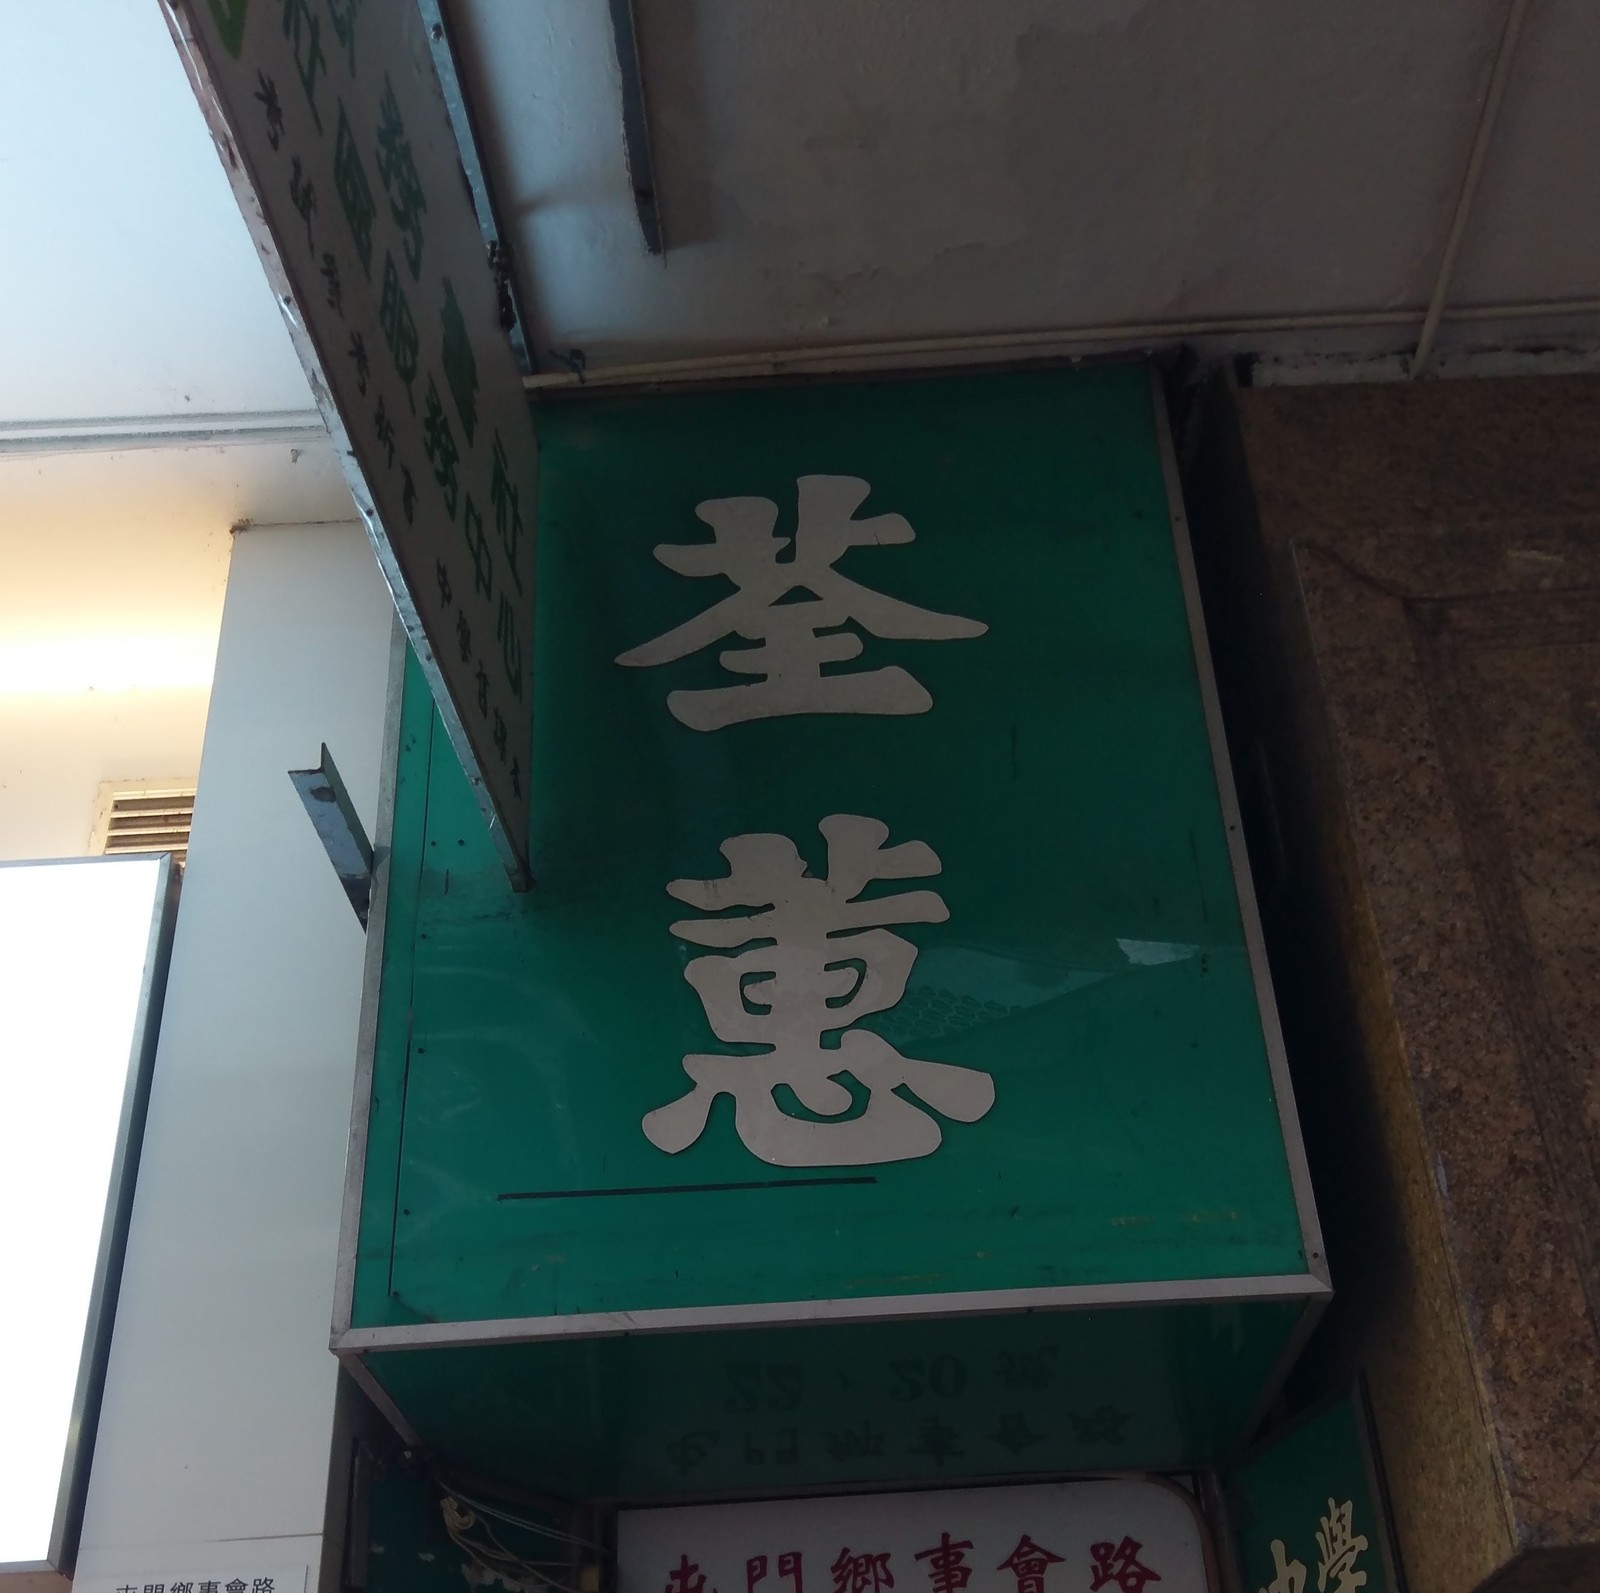 Cyun Wai Book Store sign